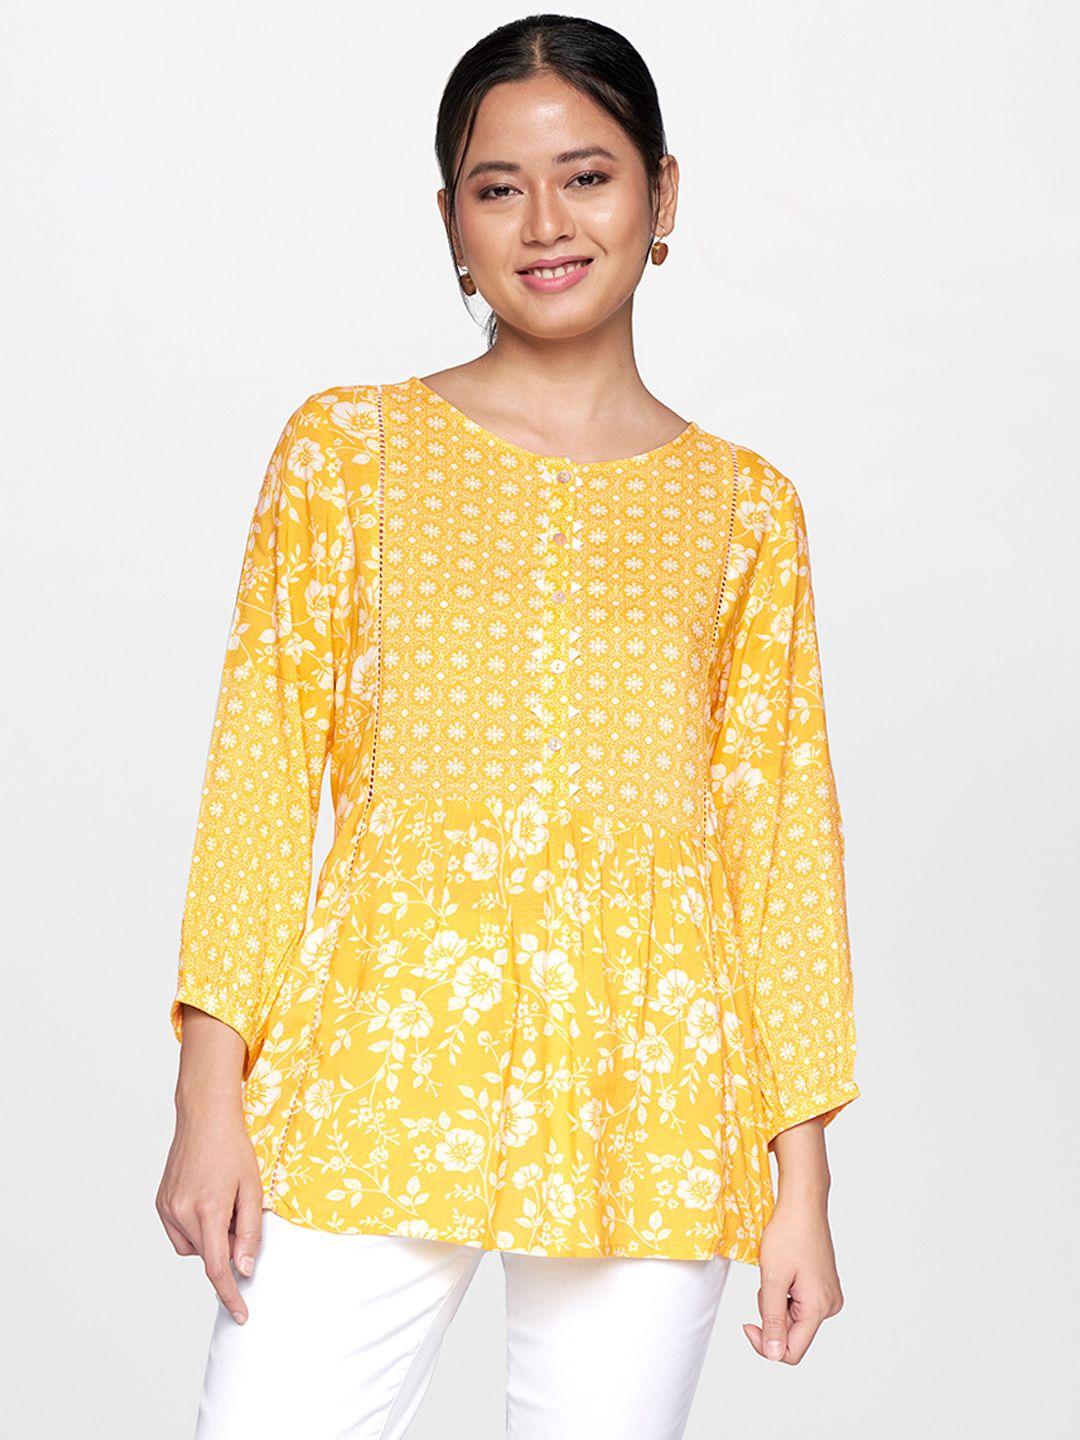 global-desi-yellow-&-white-floral-print-gathered-top